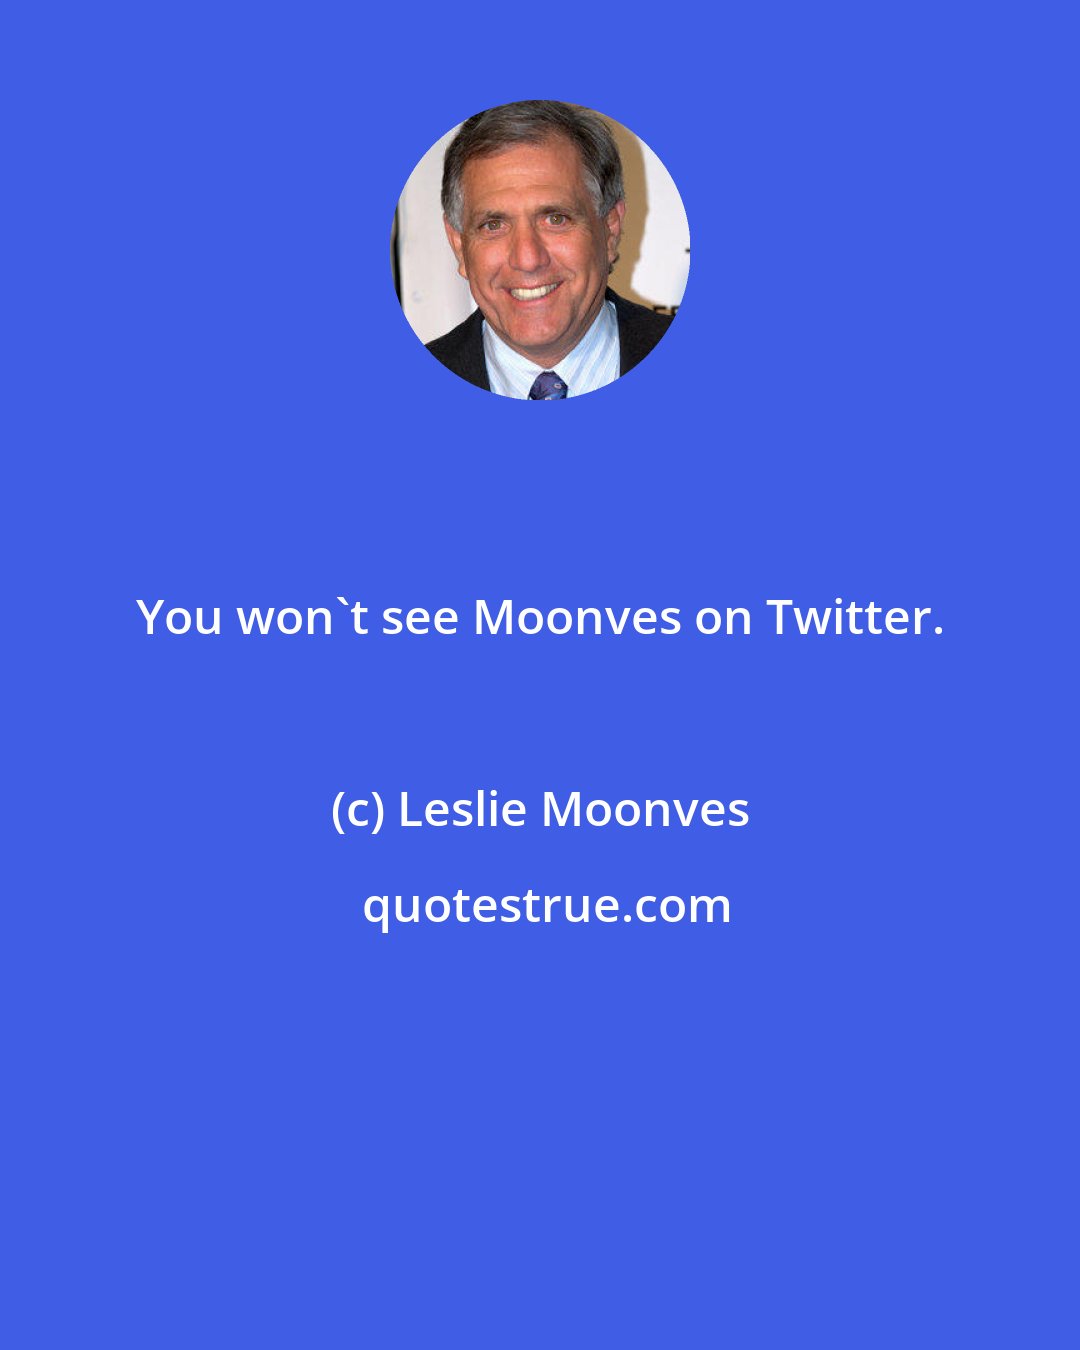 Leslie Moonves: You won't see Moonves on Twitter.